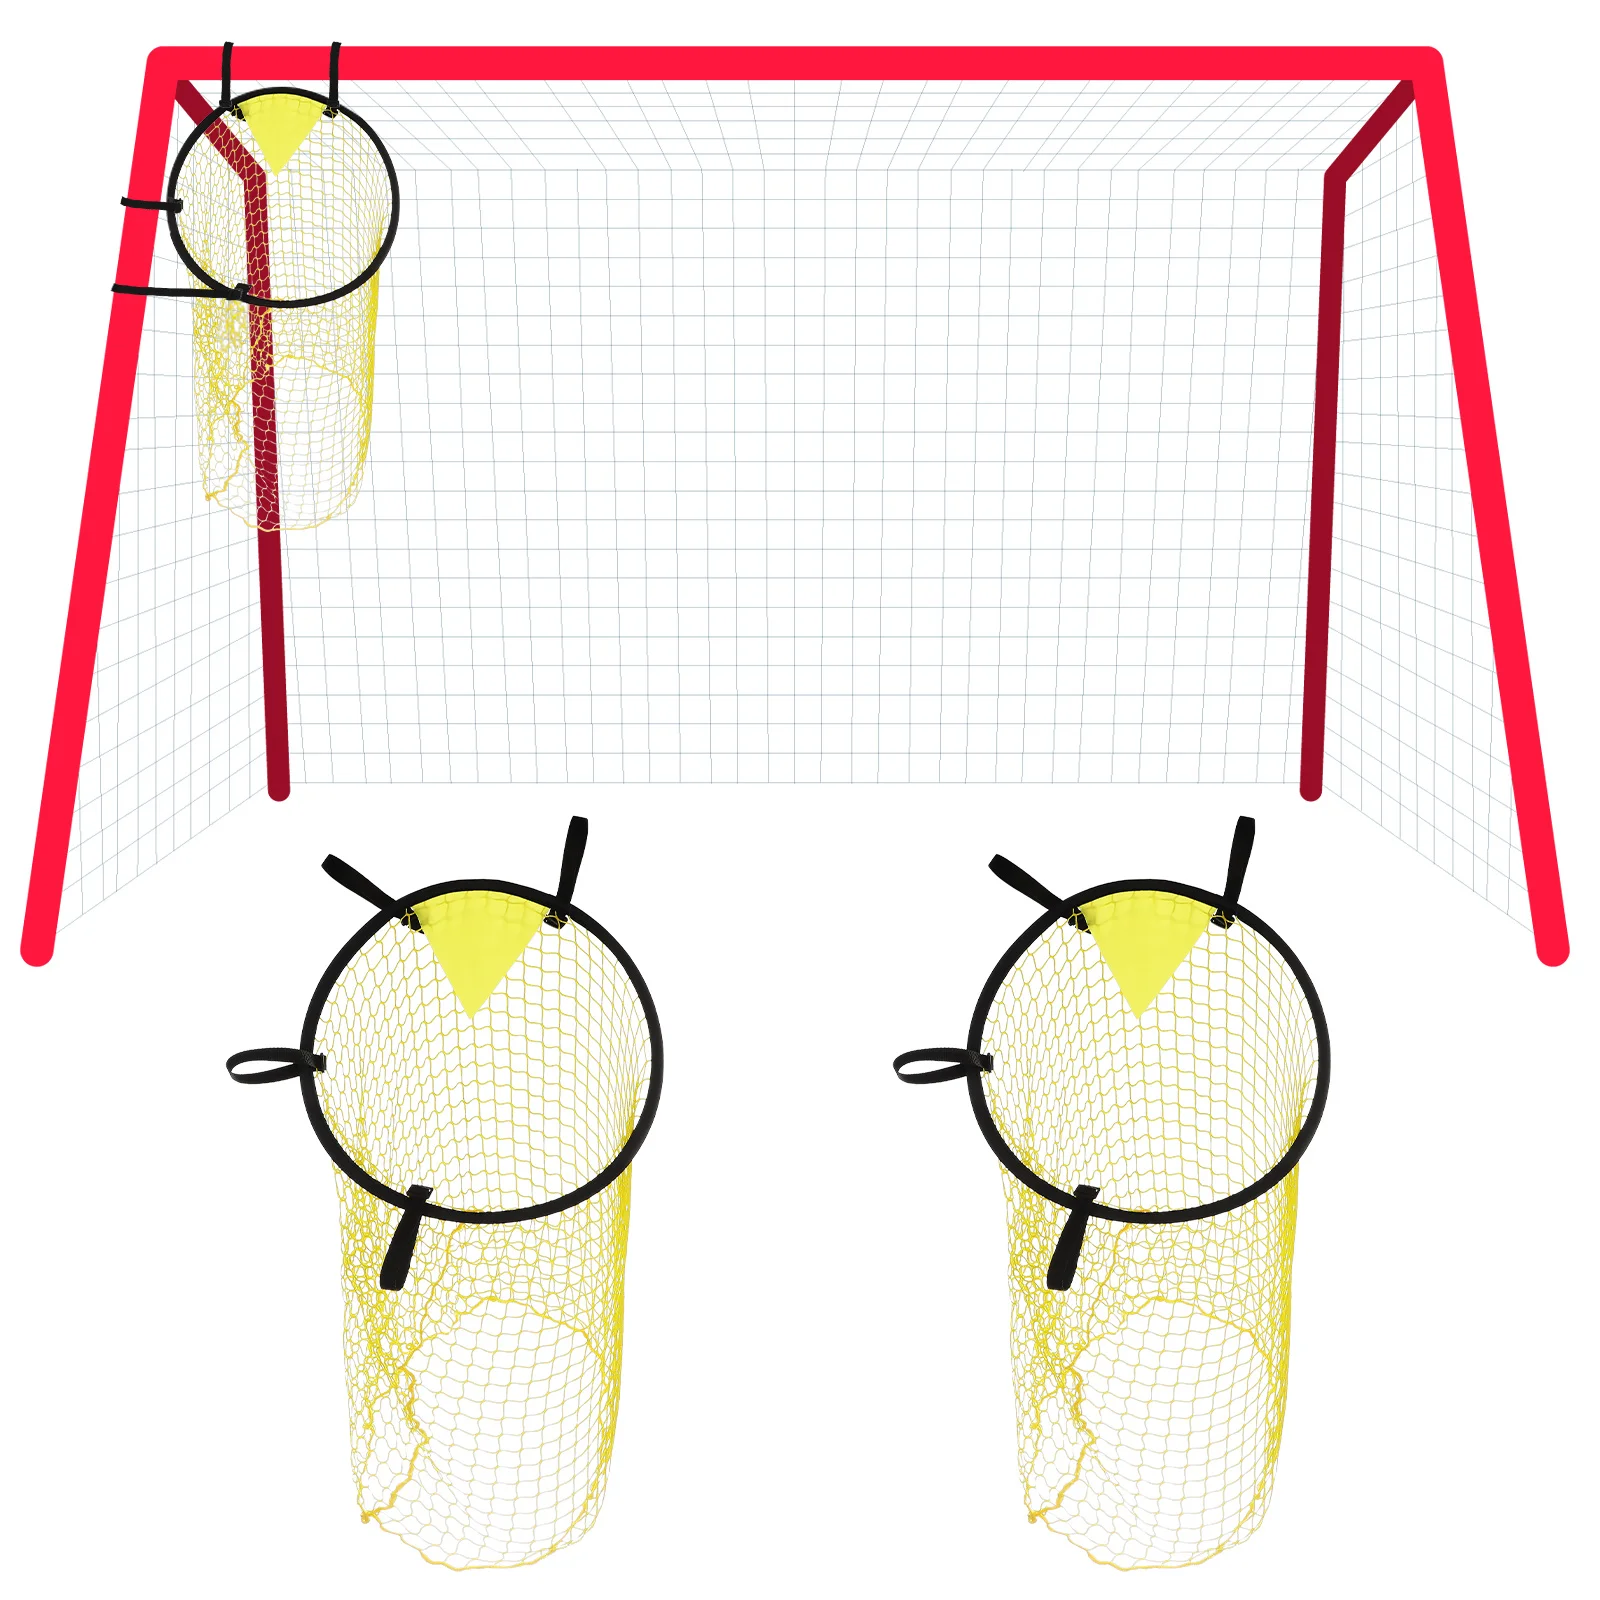 

2 Pcs Football Goal Pocket Soccer Training Equipment Indoor Net Top Bins Targets Nets Practice Kids